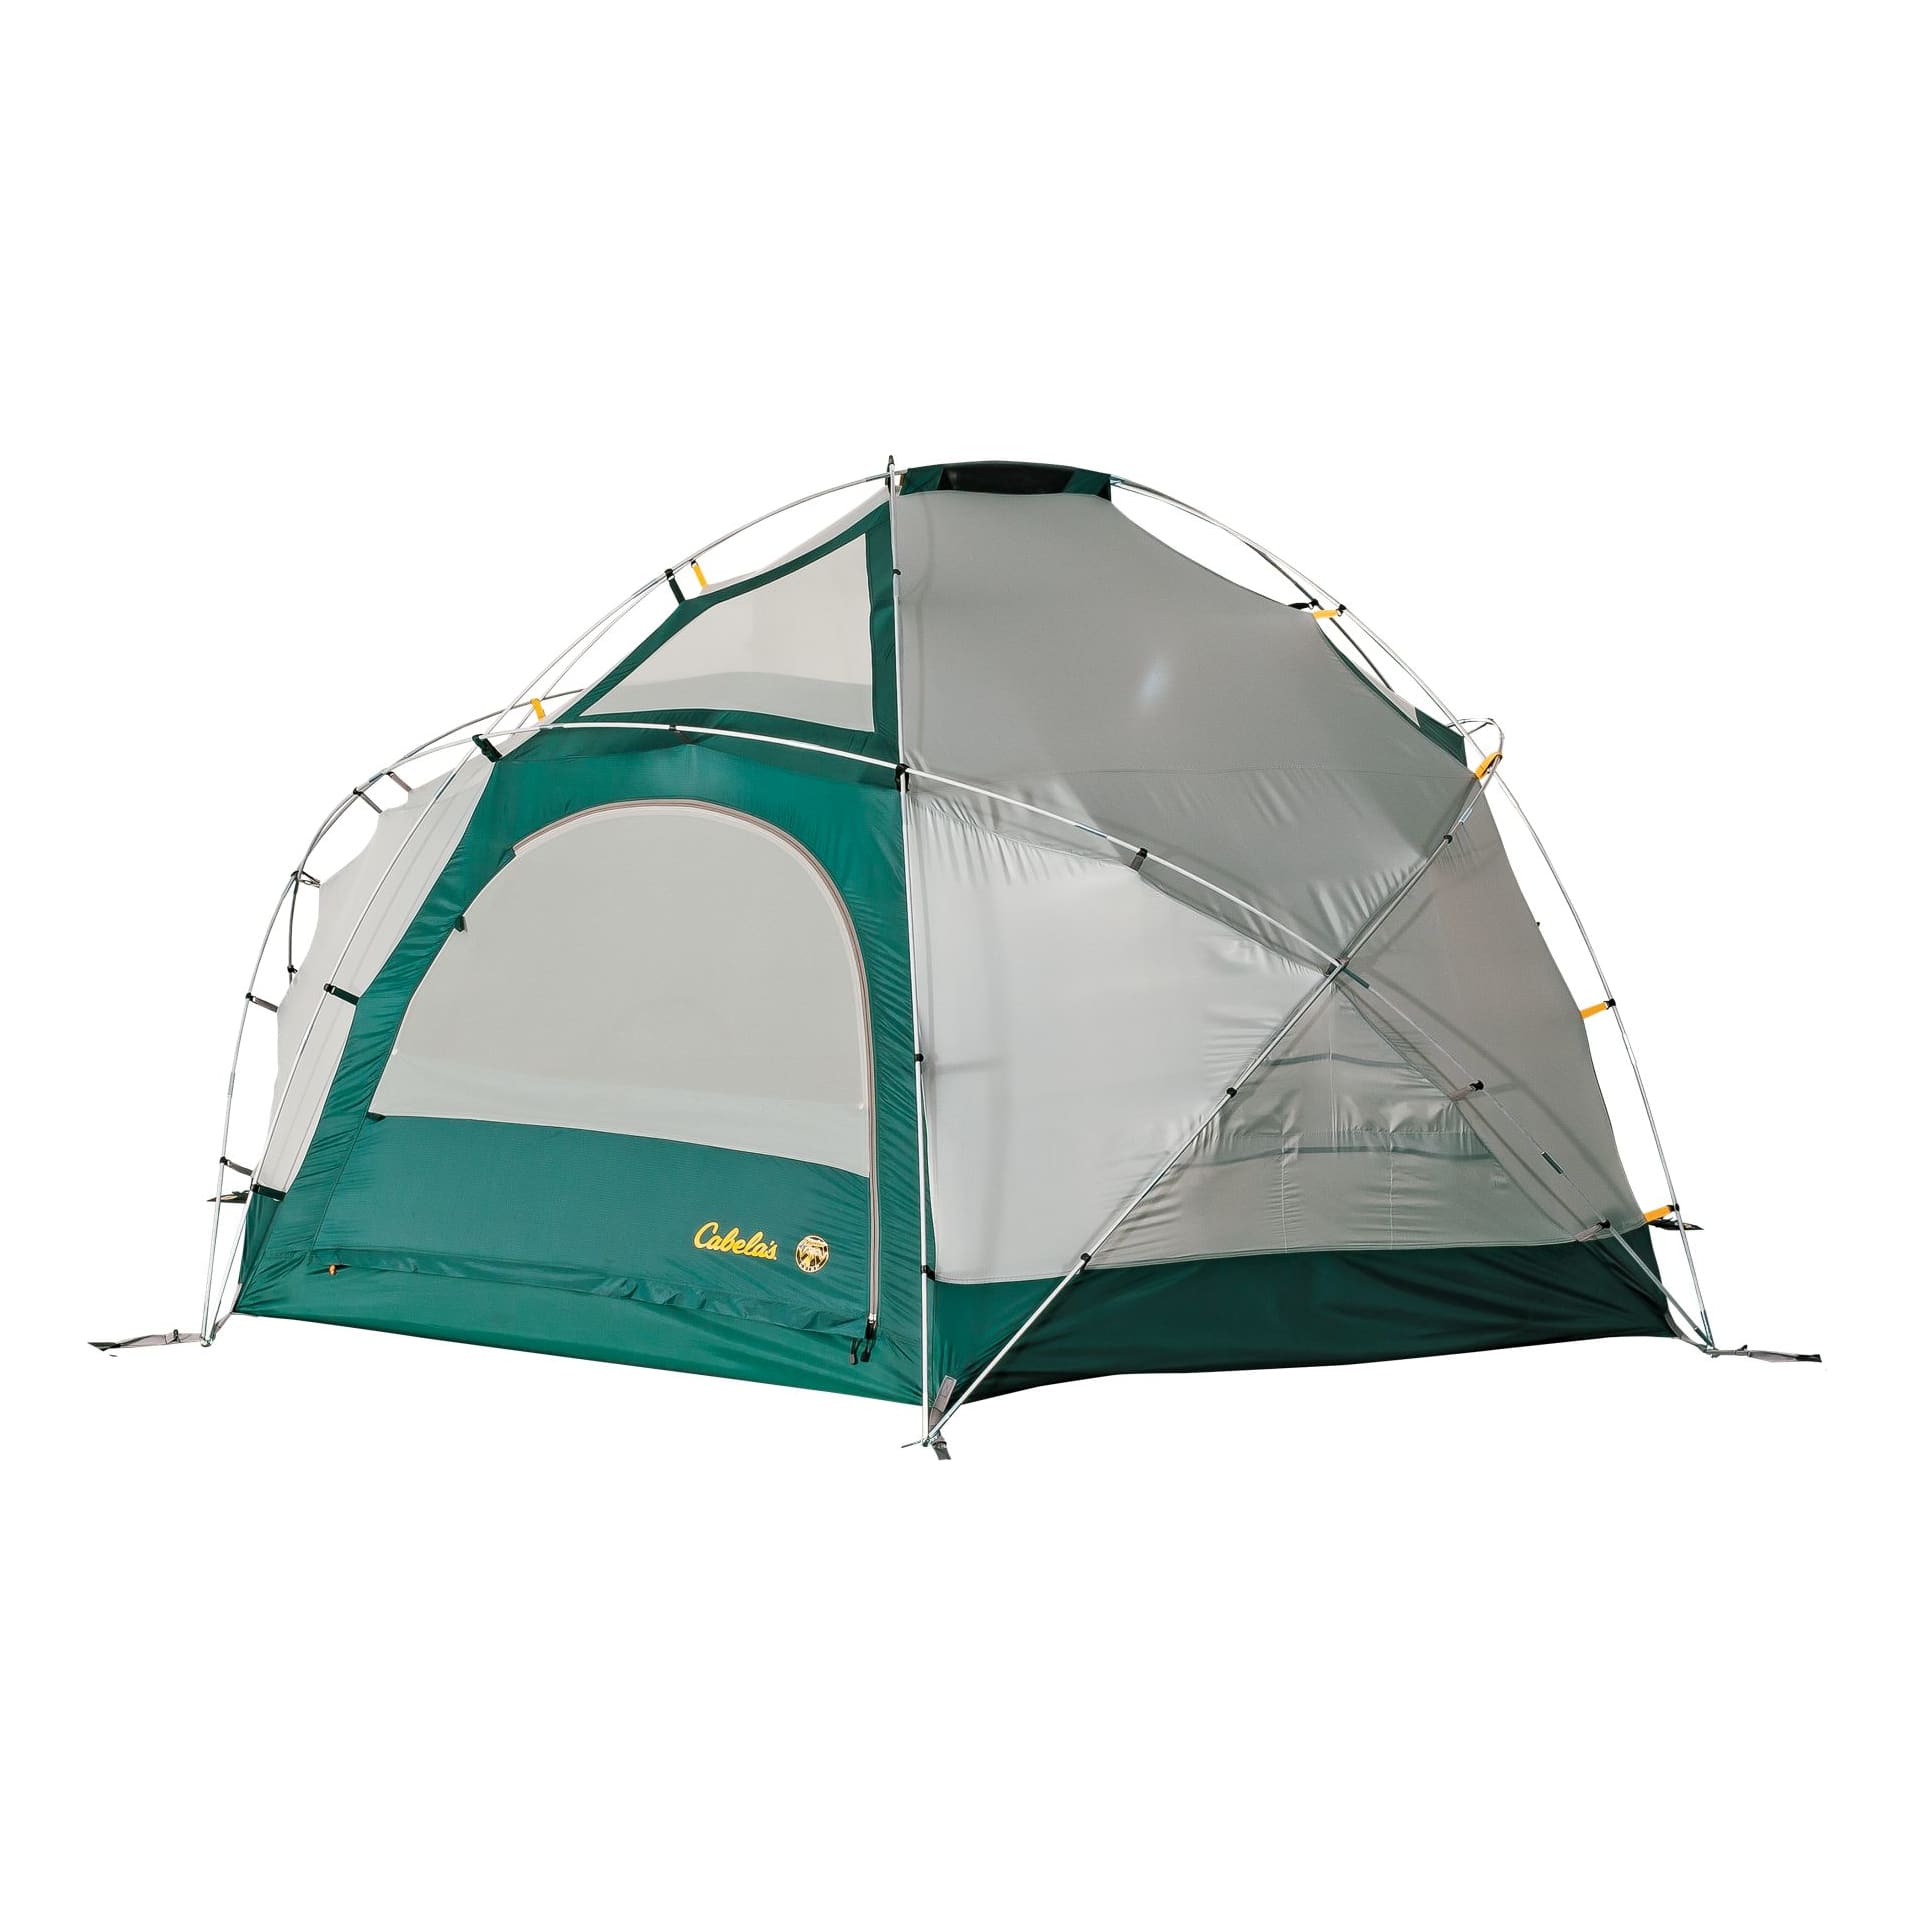 Cabela's® Alaskan Guide Model Geodesic 6-Person Tent